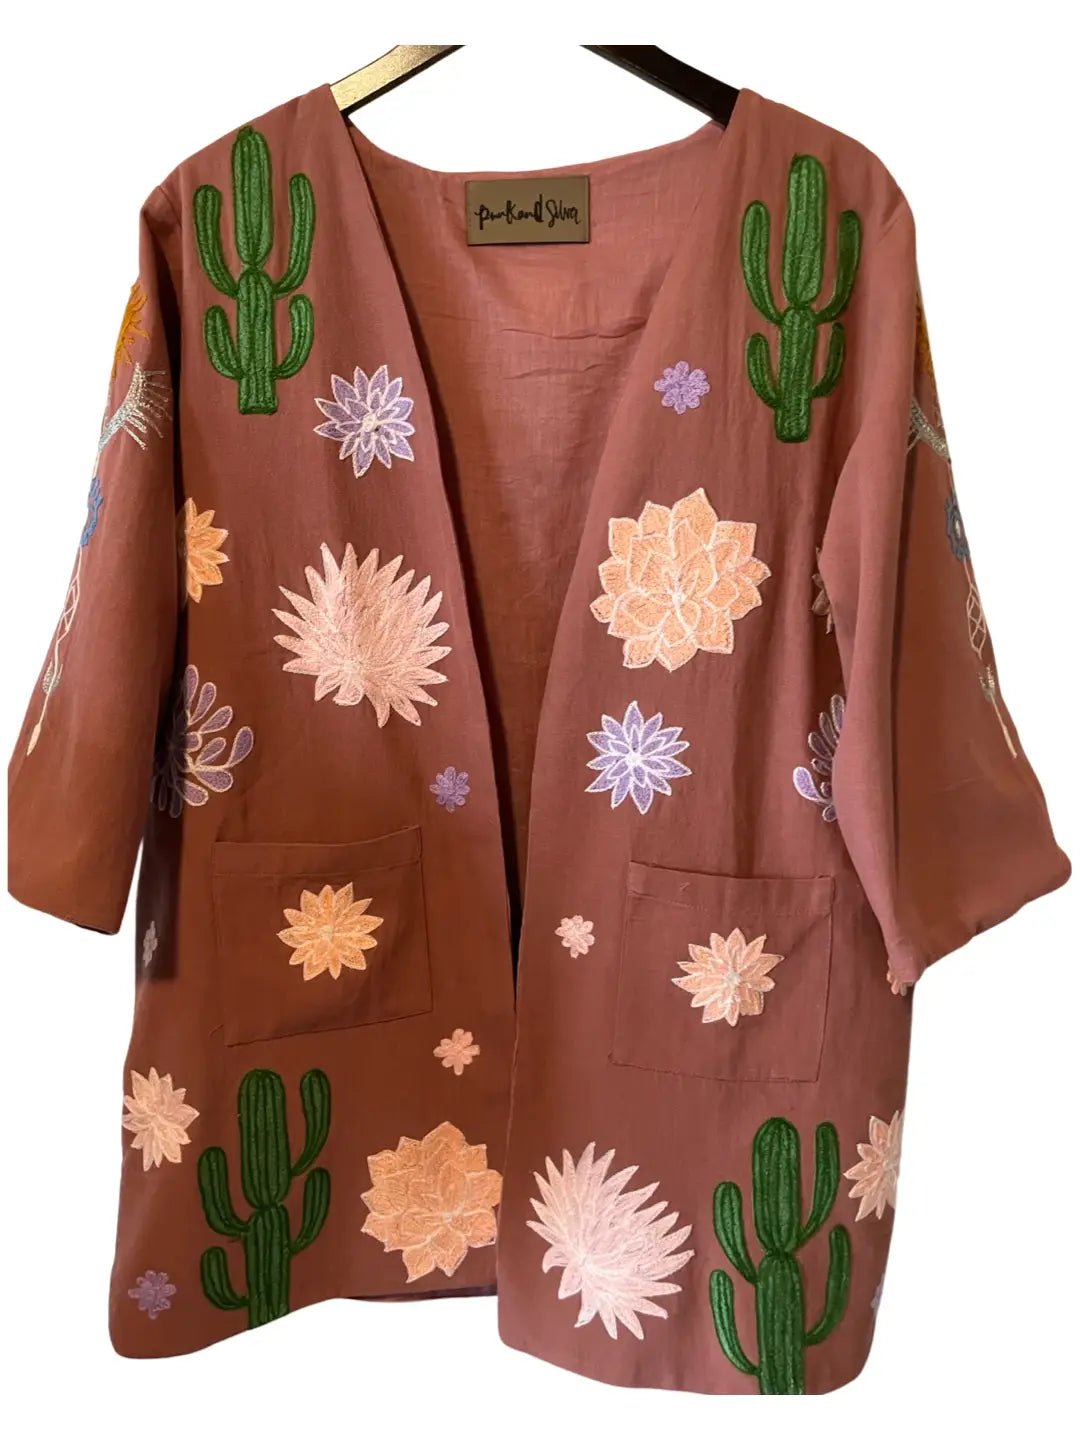 Embroidered Desert Jacket Terra Cotta